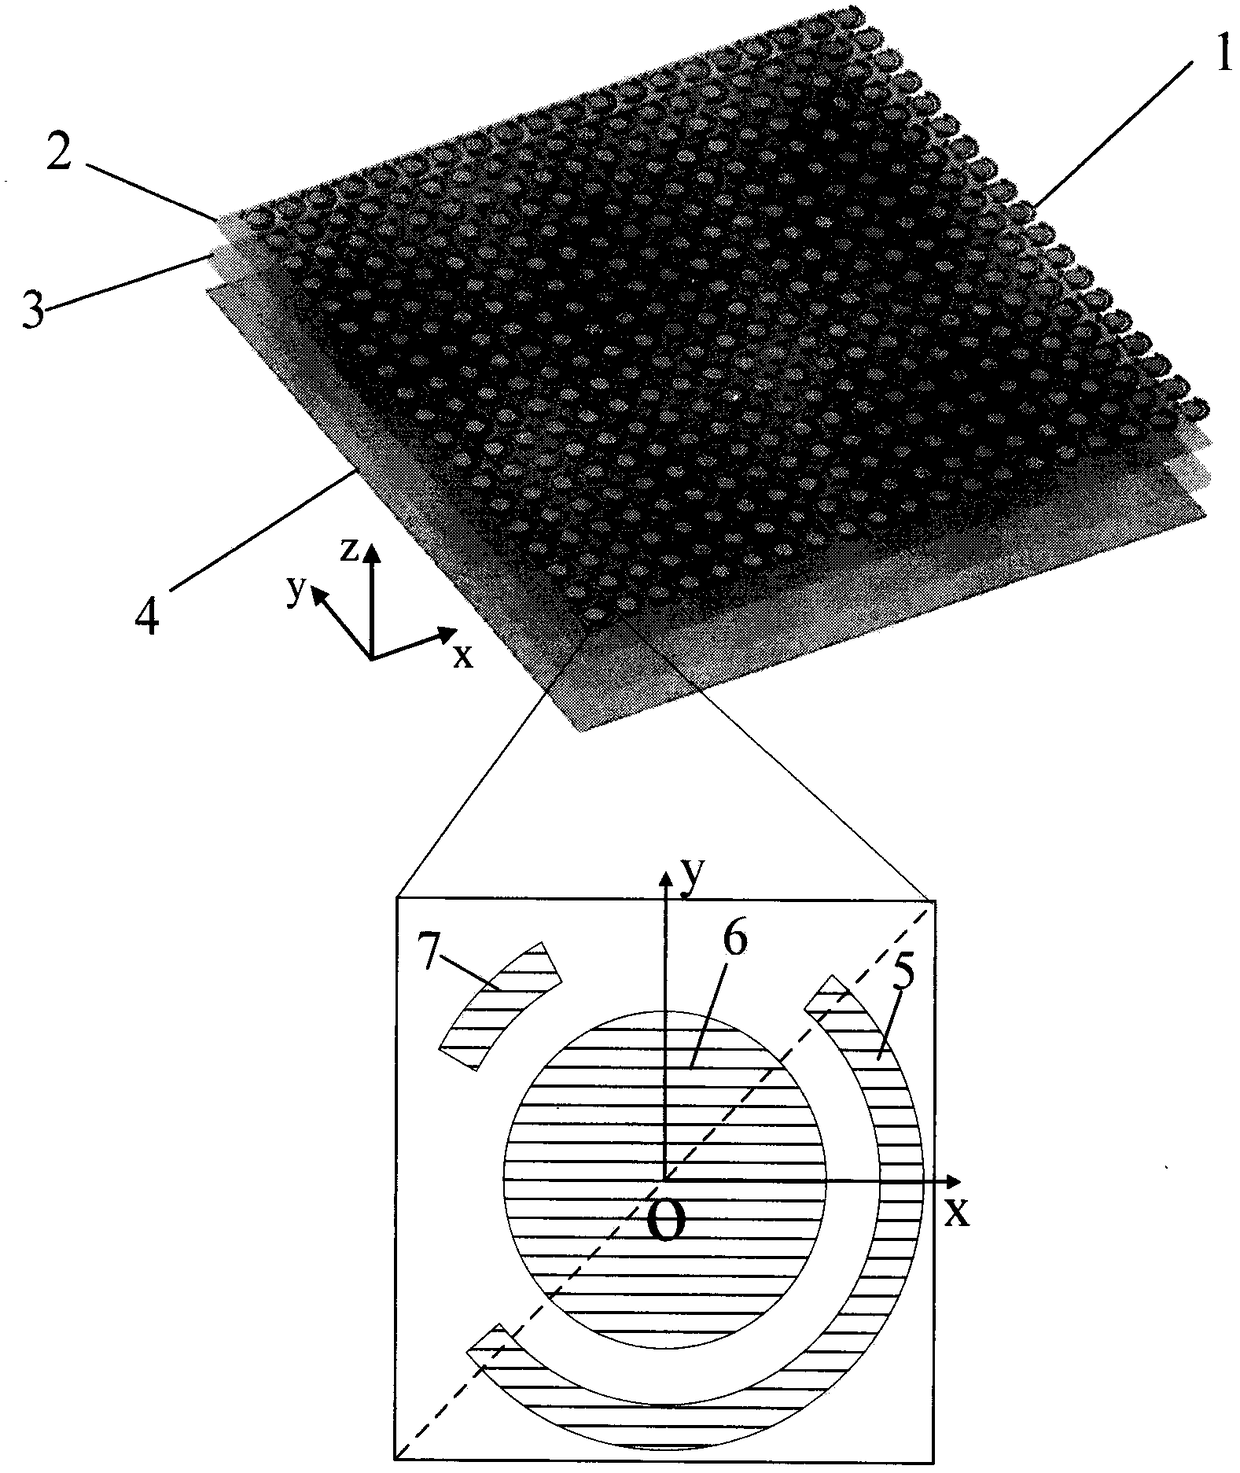 Angle-insensitive conformal broadband reflective linear polarization converter